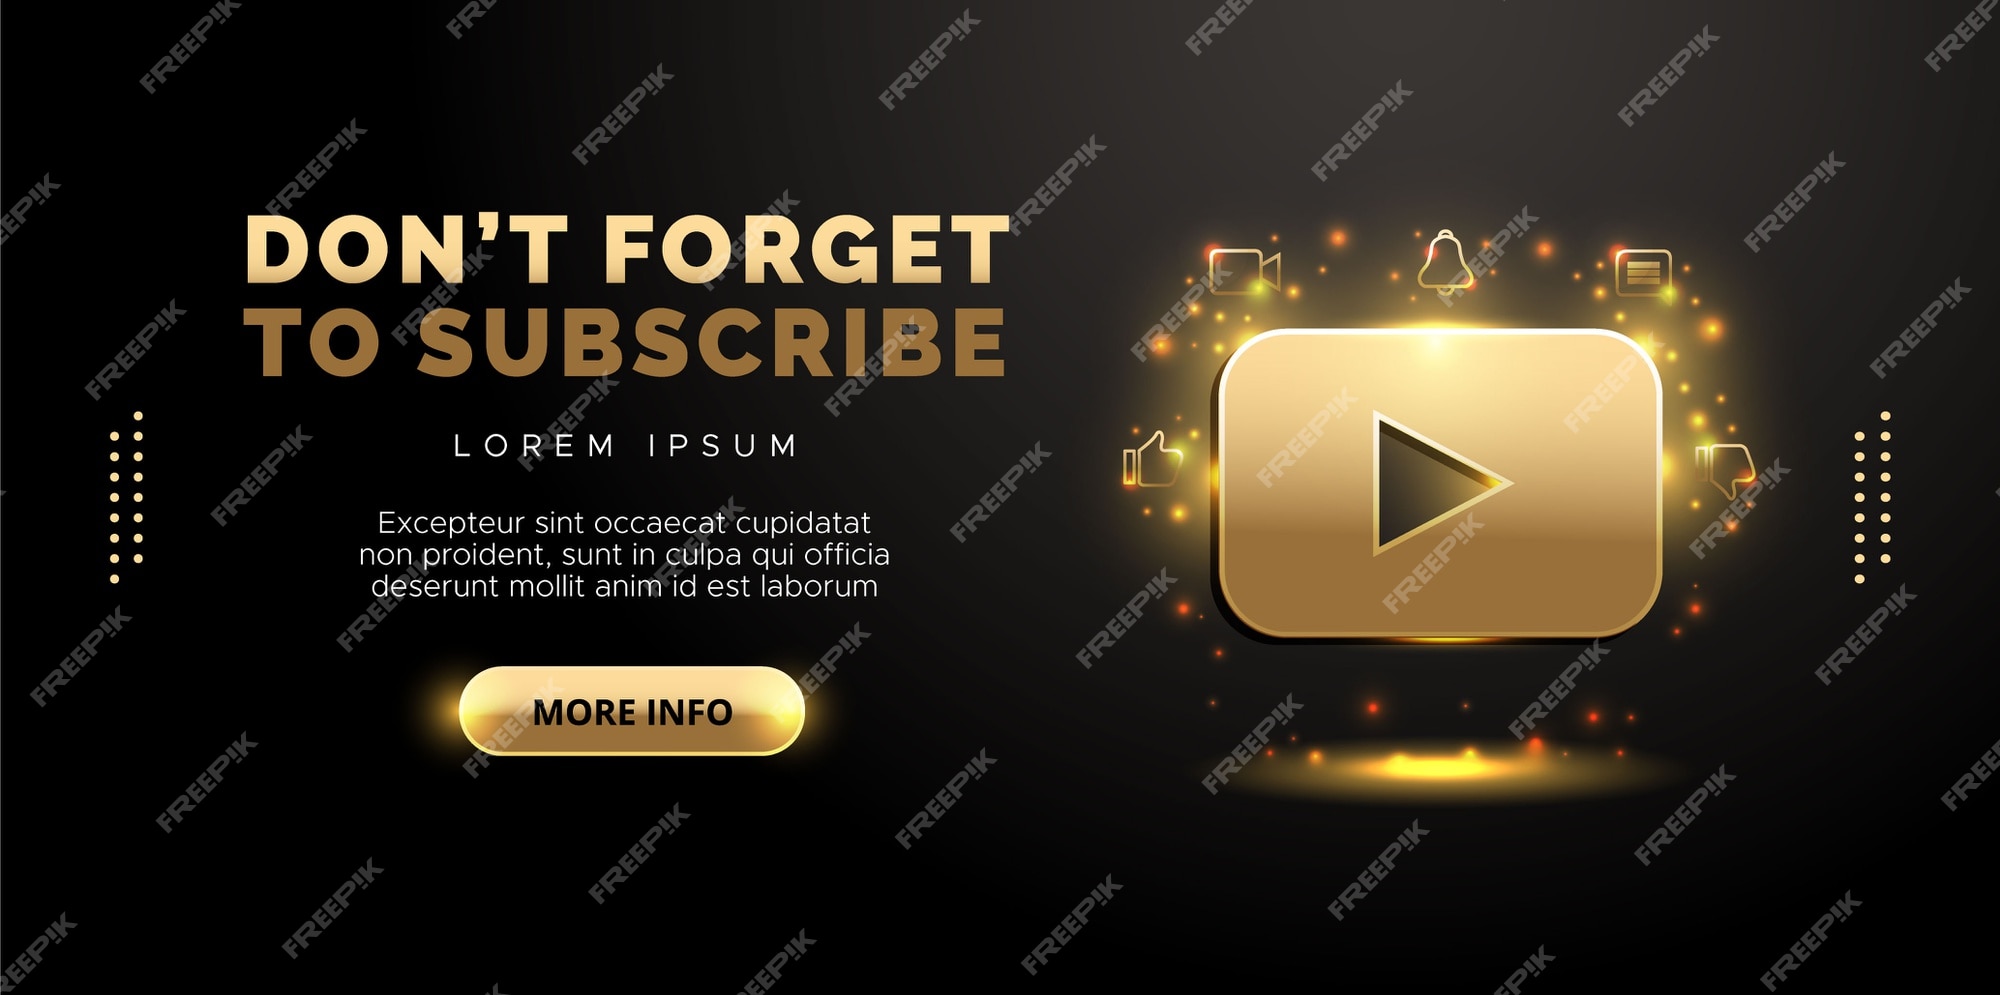 Premium Vector | Youtube design in gold on black background